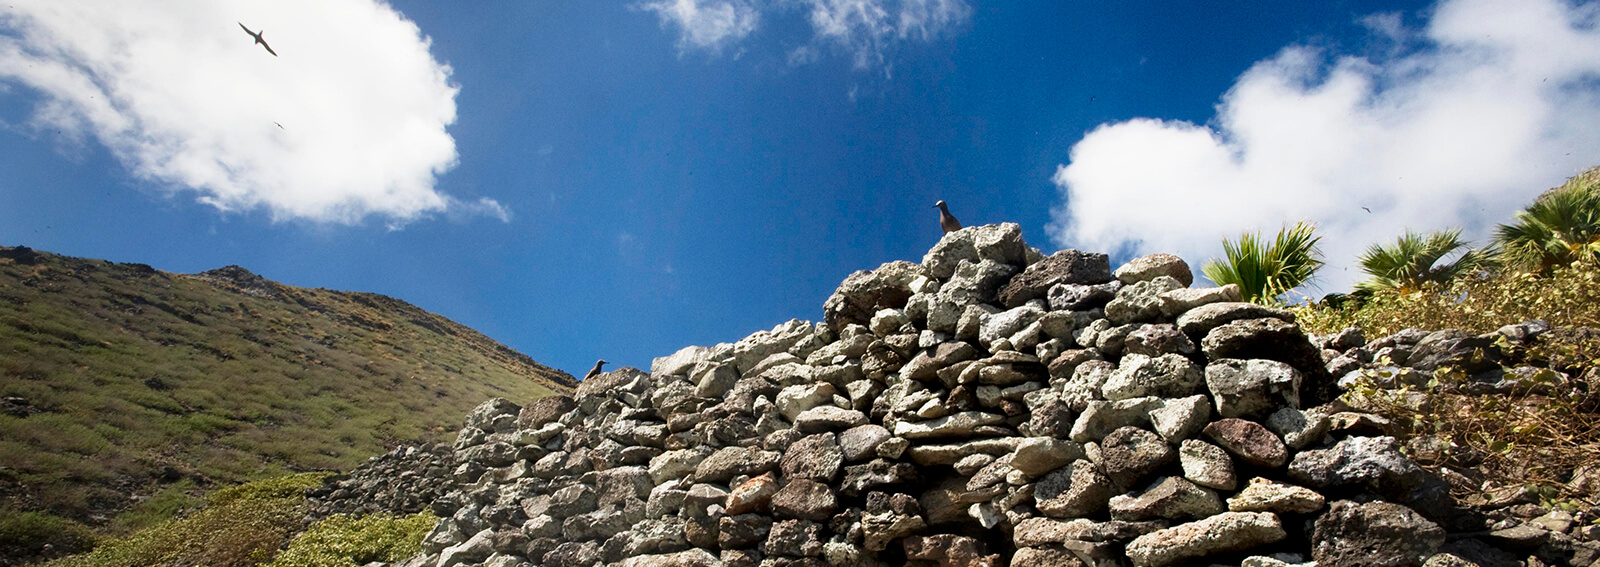 A bird sits atop a rock wall